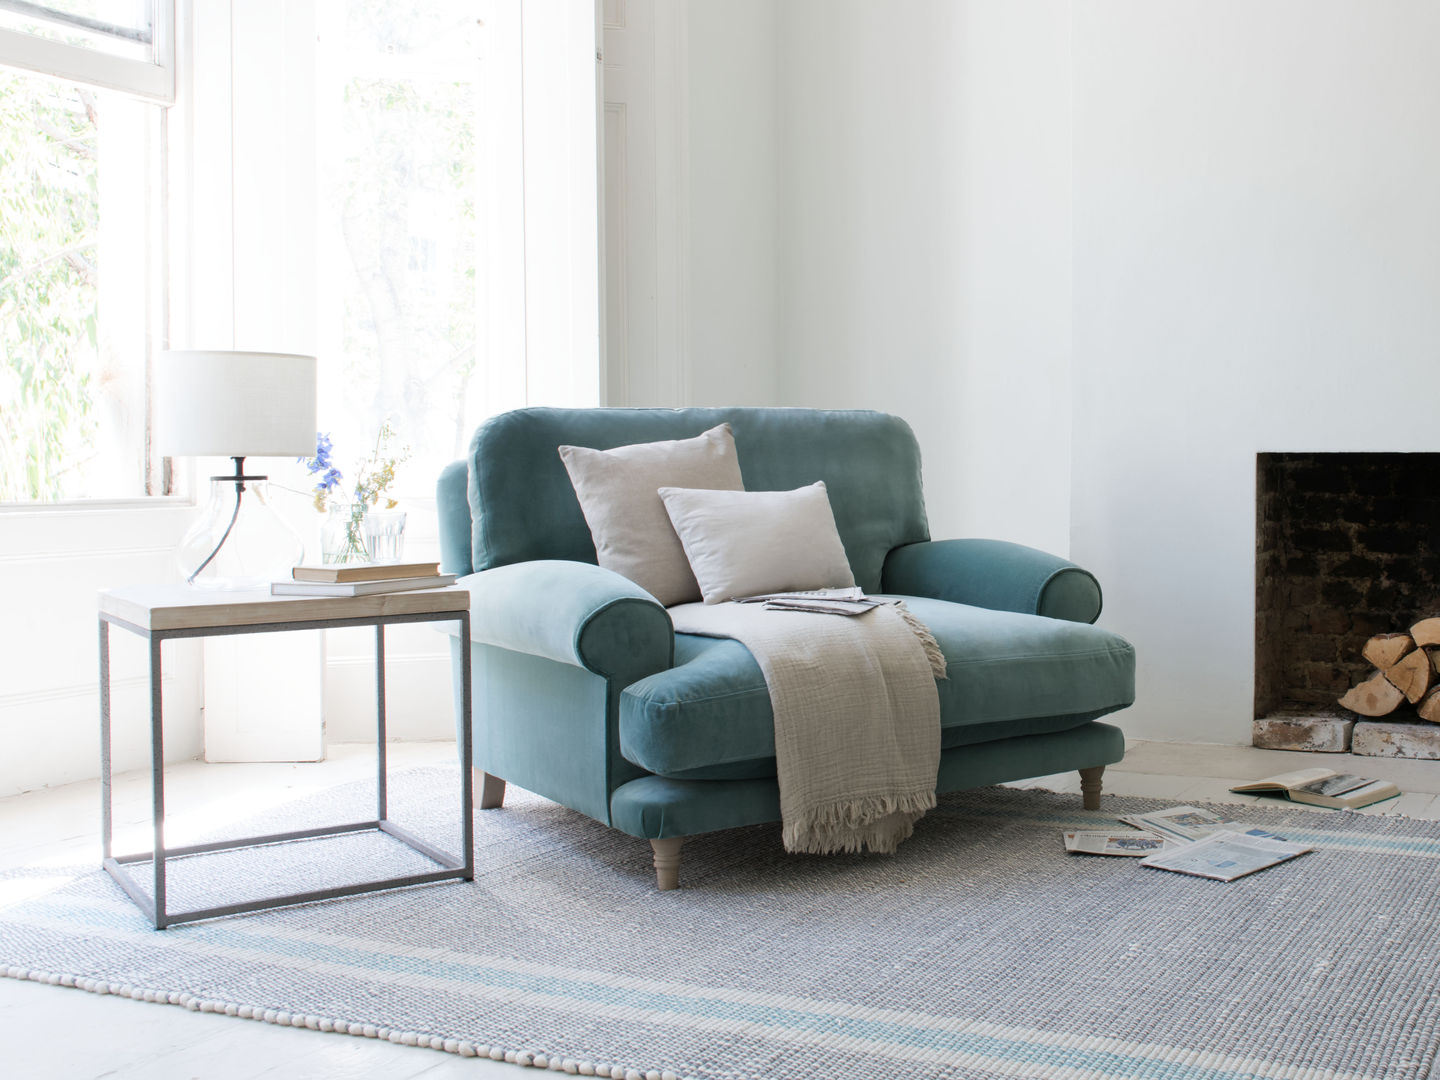 Slowcoach love seat Loaf Salas de estar modernas armchair,teal,green,sea blue,velvet,love seat,living room,sofa